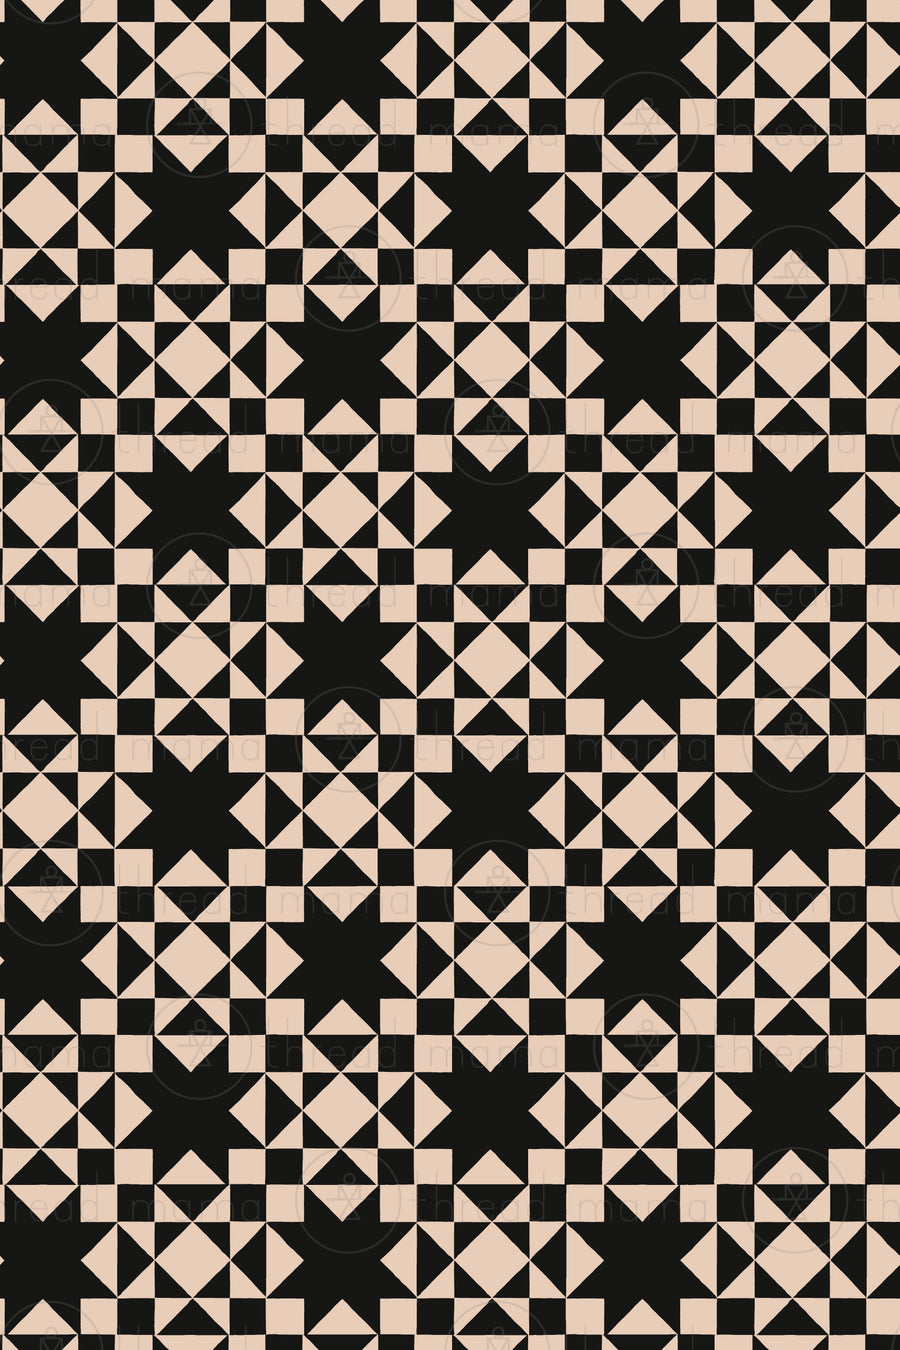 Repeating Pattern 216 - Set (Seamless)